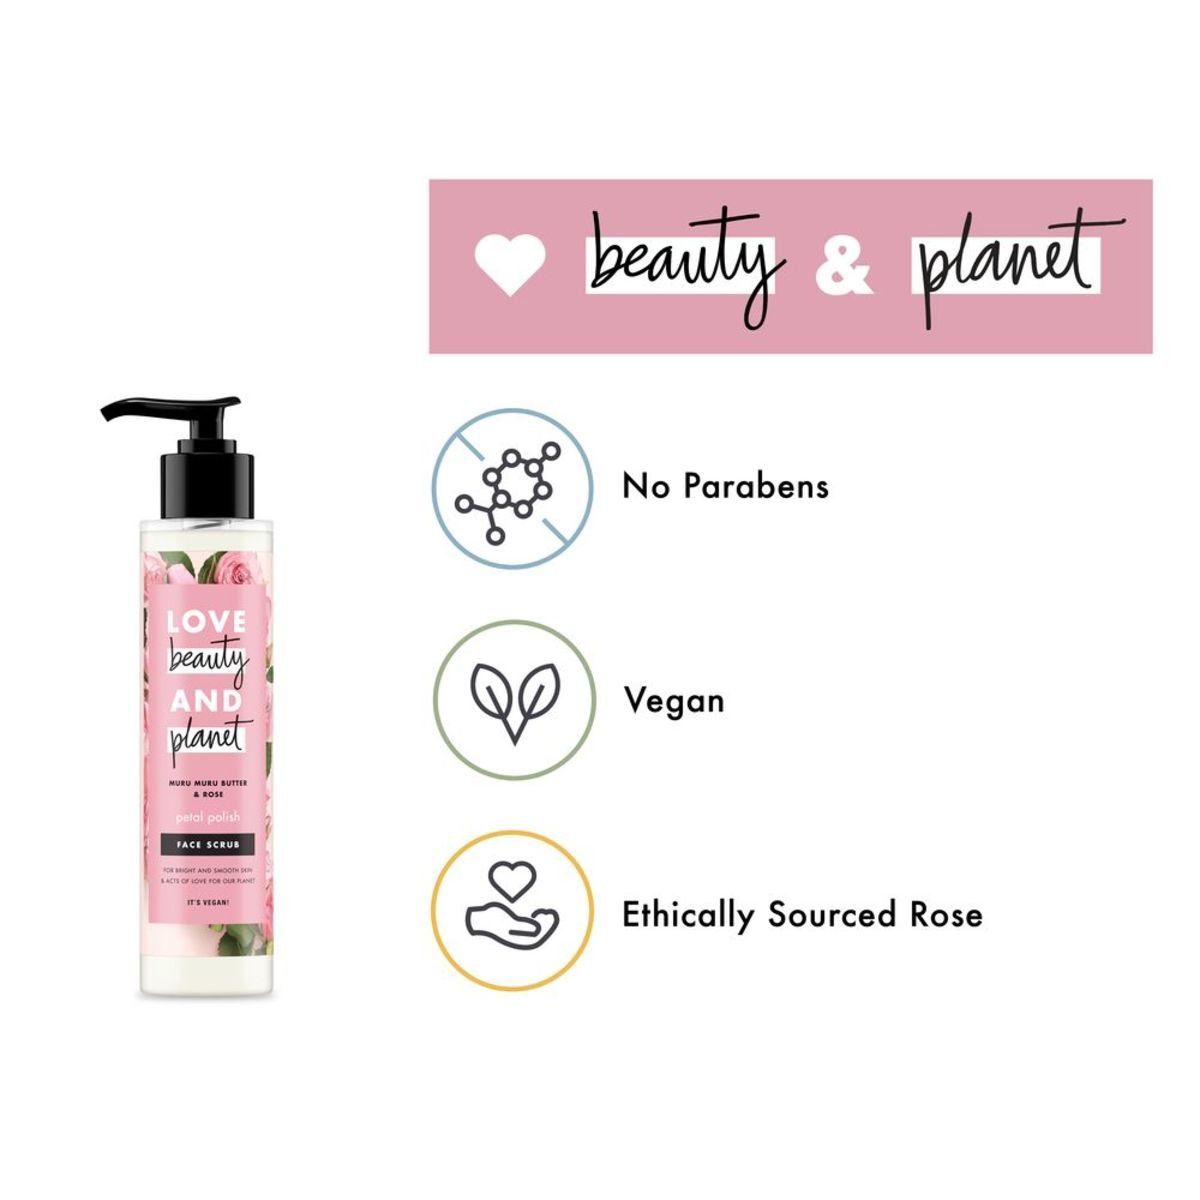 Love Beauty and Planet Face Scrub Petal Polish Murumuru Butter & Rose 125 ml